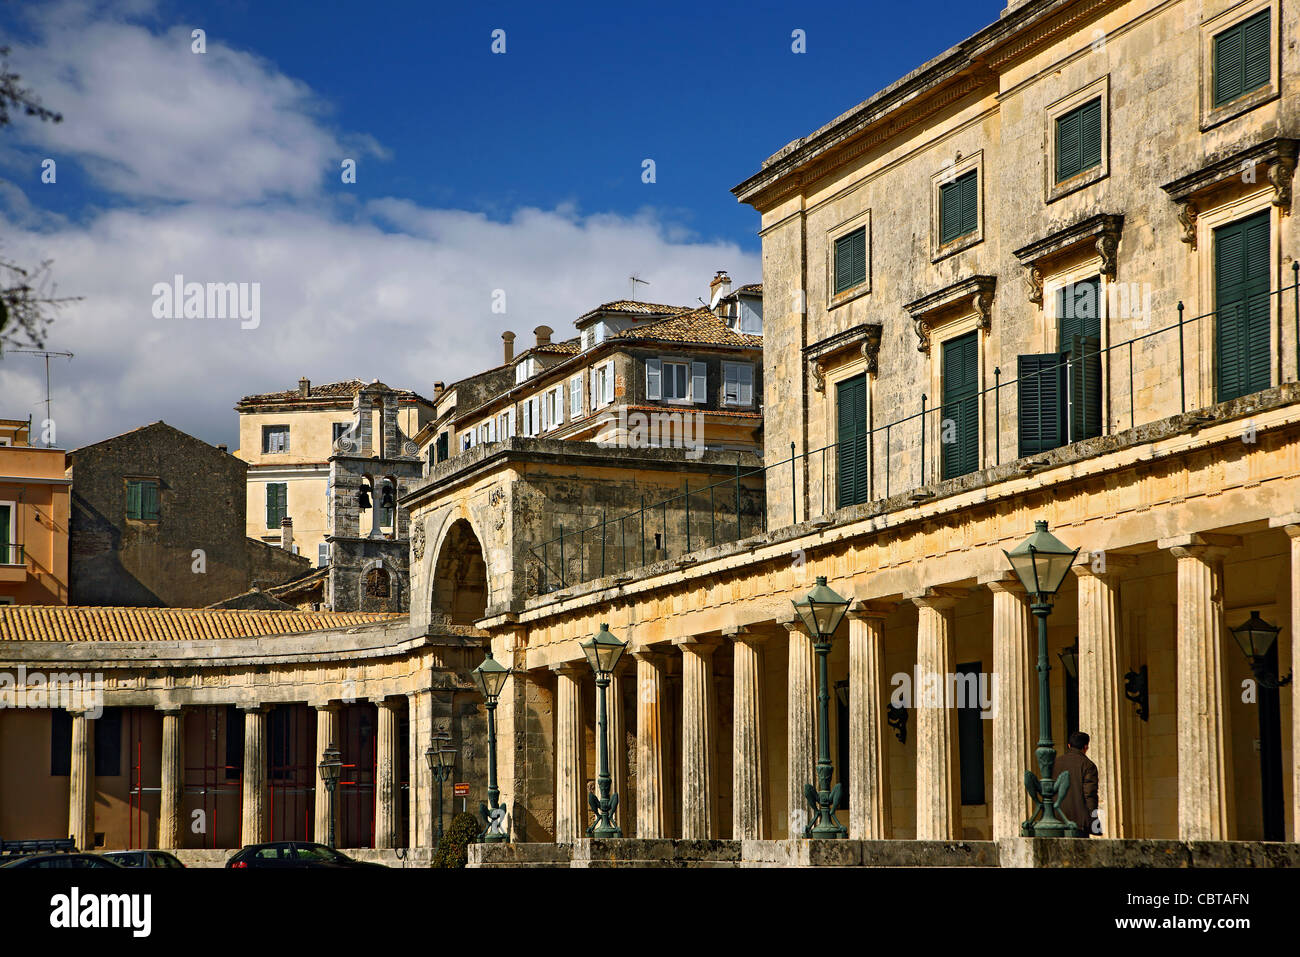 The 'Palace of Saints George & Michael' at the edge of Spianada and Liston, Corfu (or 'Kerkyra') Greece. Stock Photo